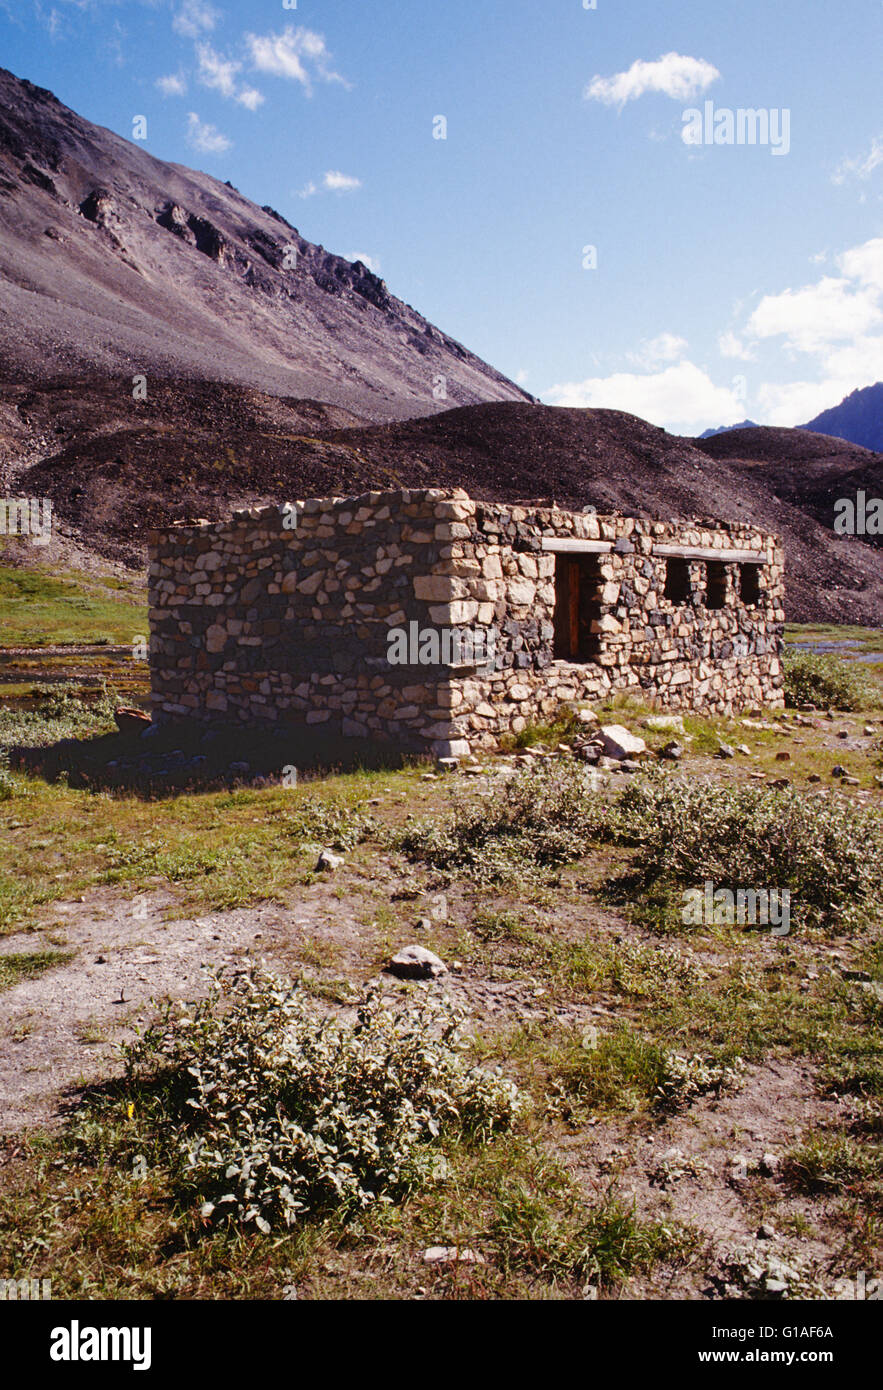 Ruins of former officers quarters at a gulag prison near Amguema, Chukchi Peninsula, Magadon Region, Siberia, Russian Federation Stock Photo